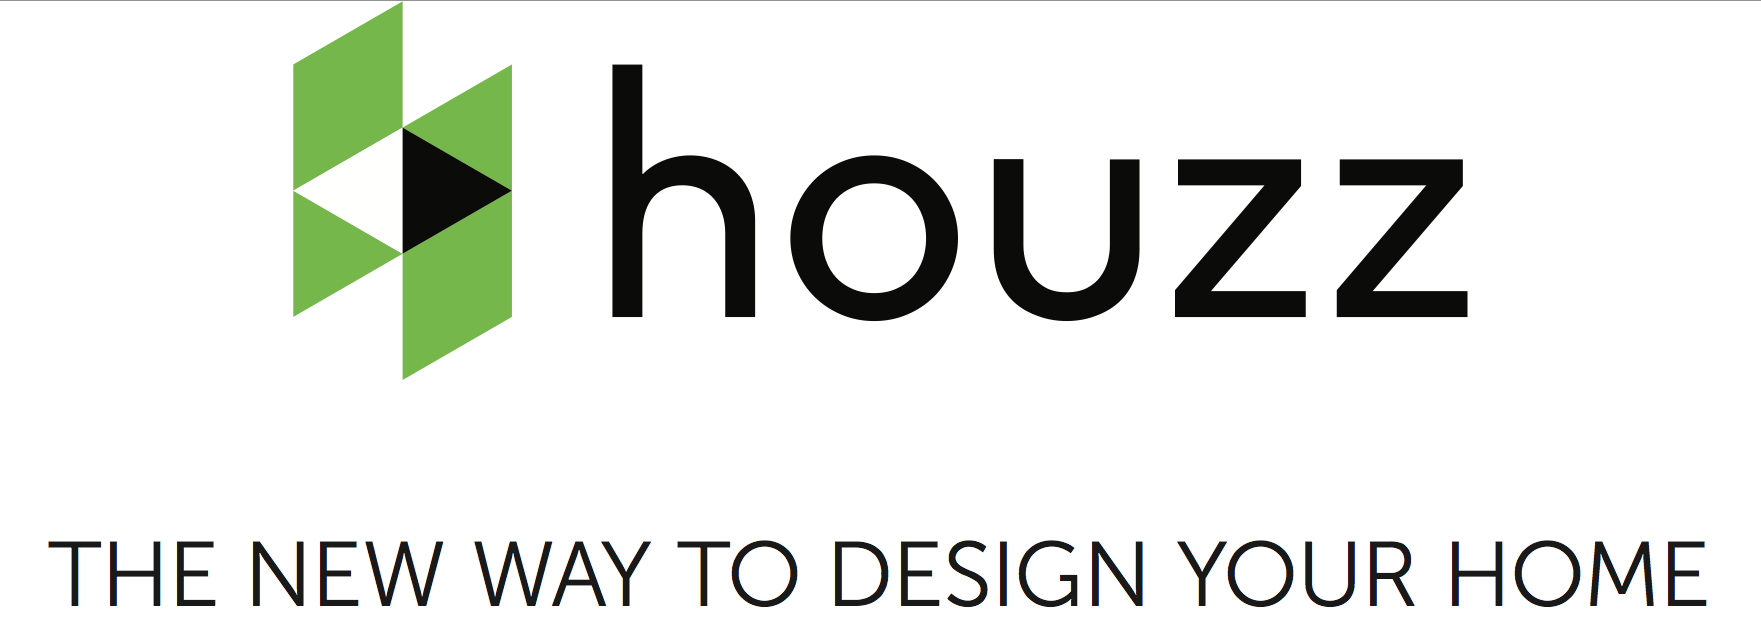 best of houzz logo 2018